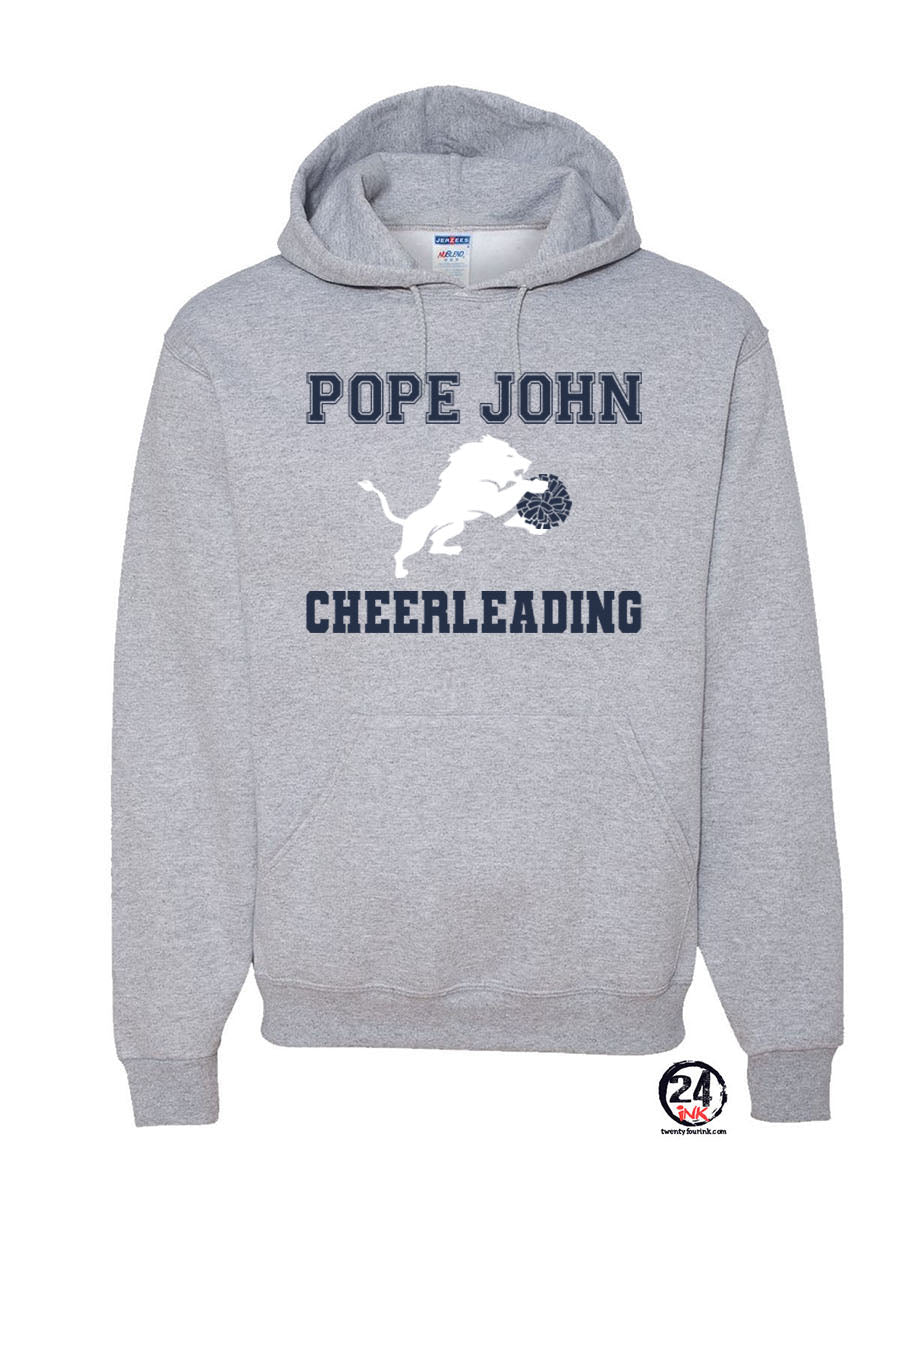 Pope John Cheer Design 1 Hooded Sweatshirt